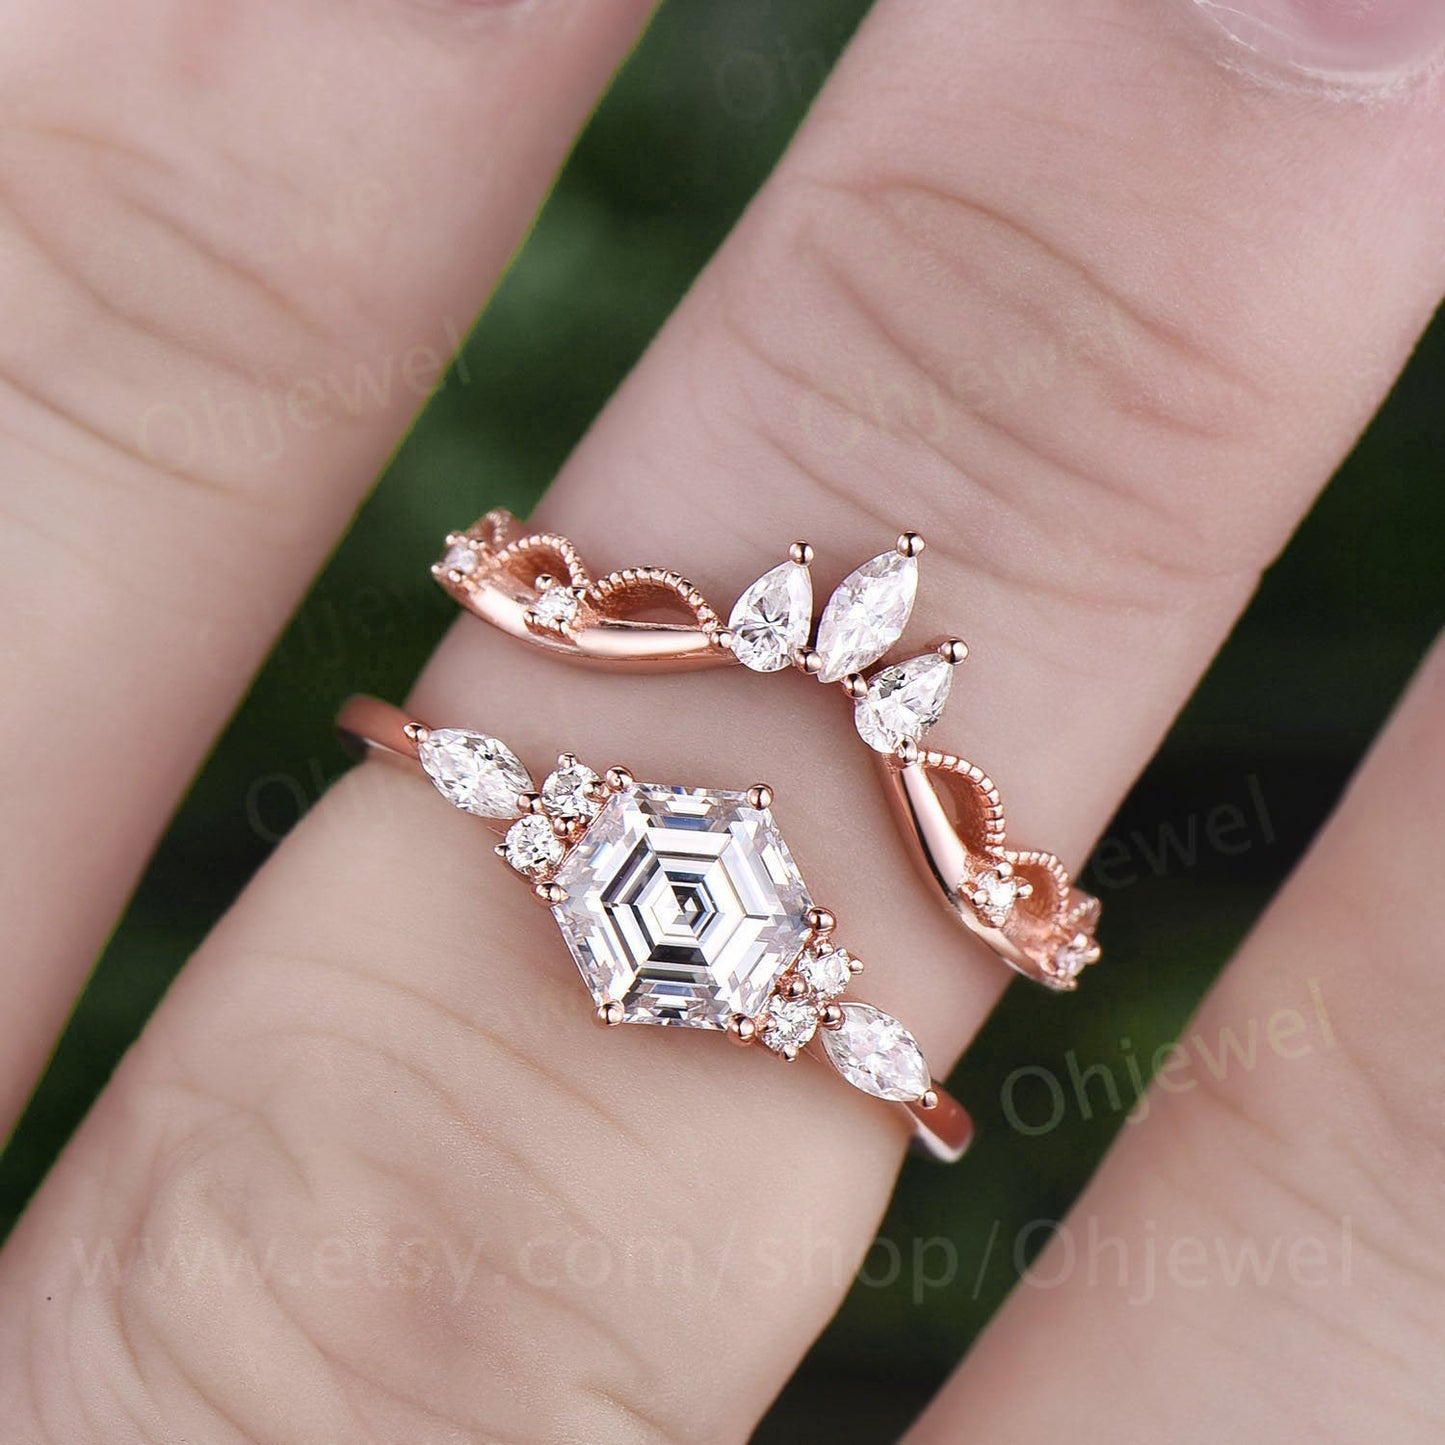 Hexagon moissanite engagement ring set art deco 7 stone rose gold marquise ring setting crown Milgrain wedding band anniversary ring set